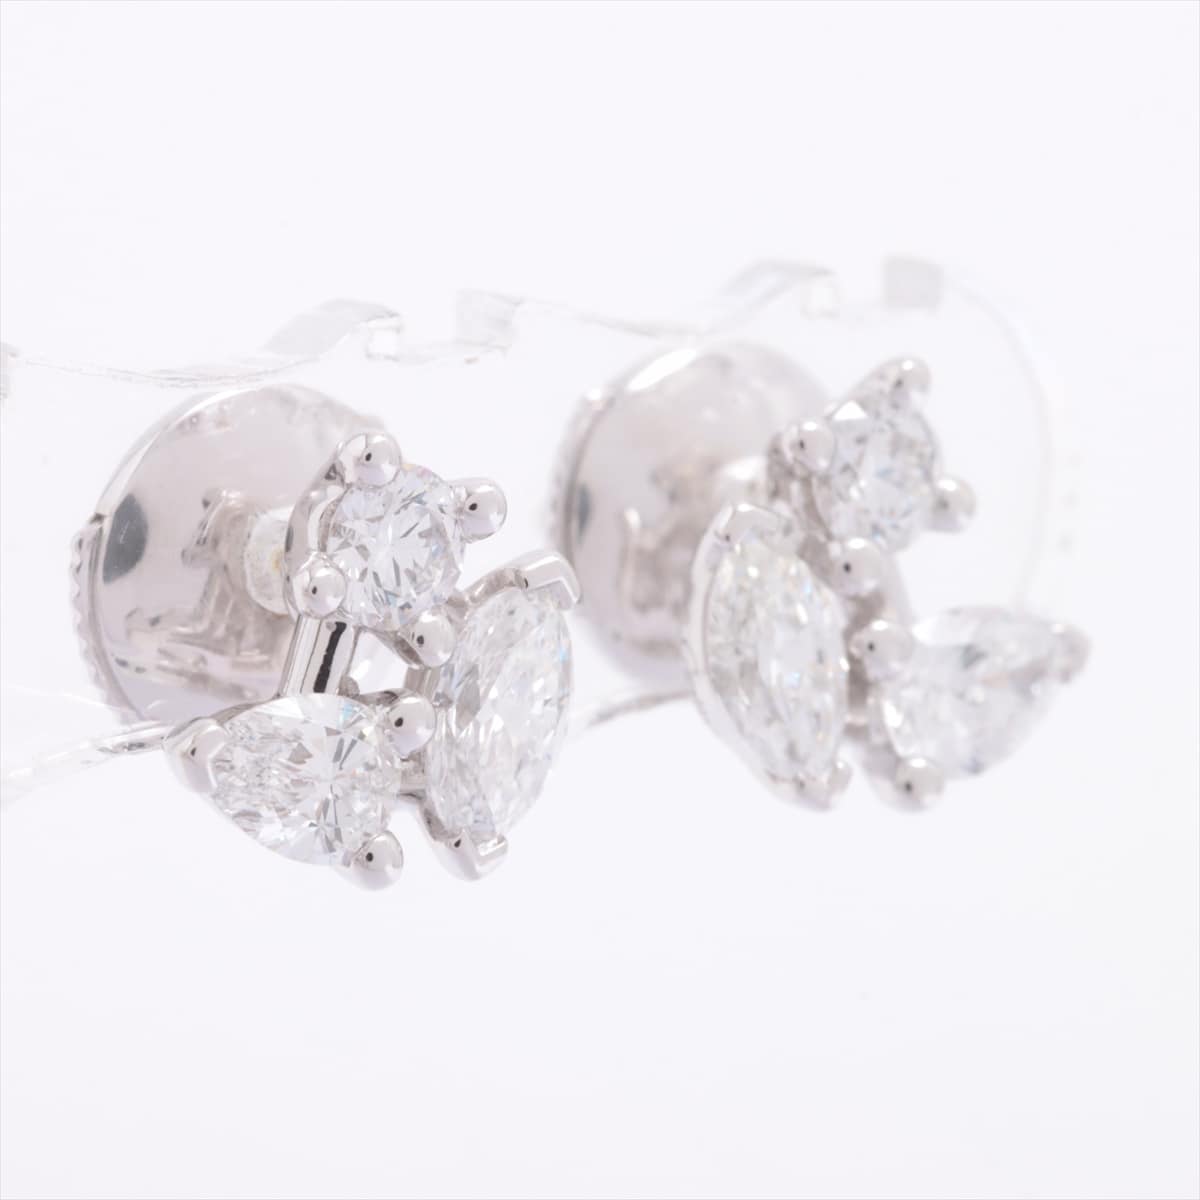 Cartier Blossom diamond Piercing jewelry 750 WG 2.6g